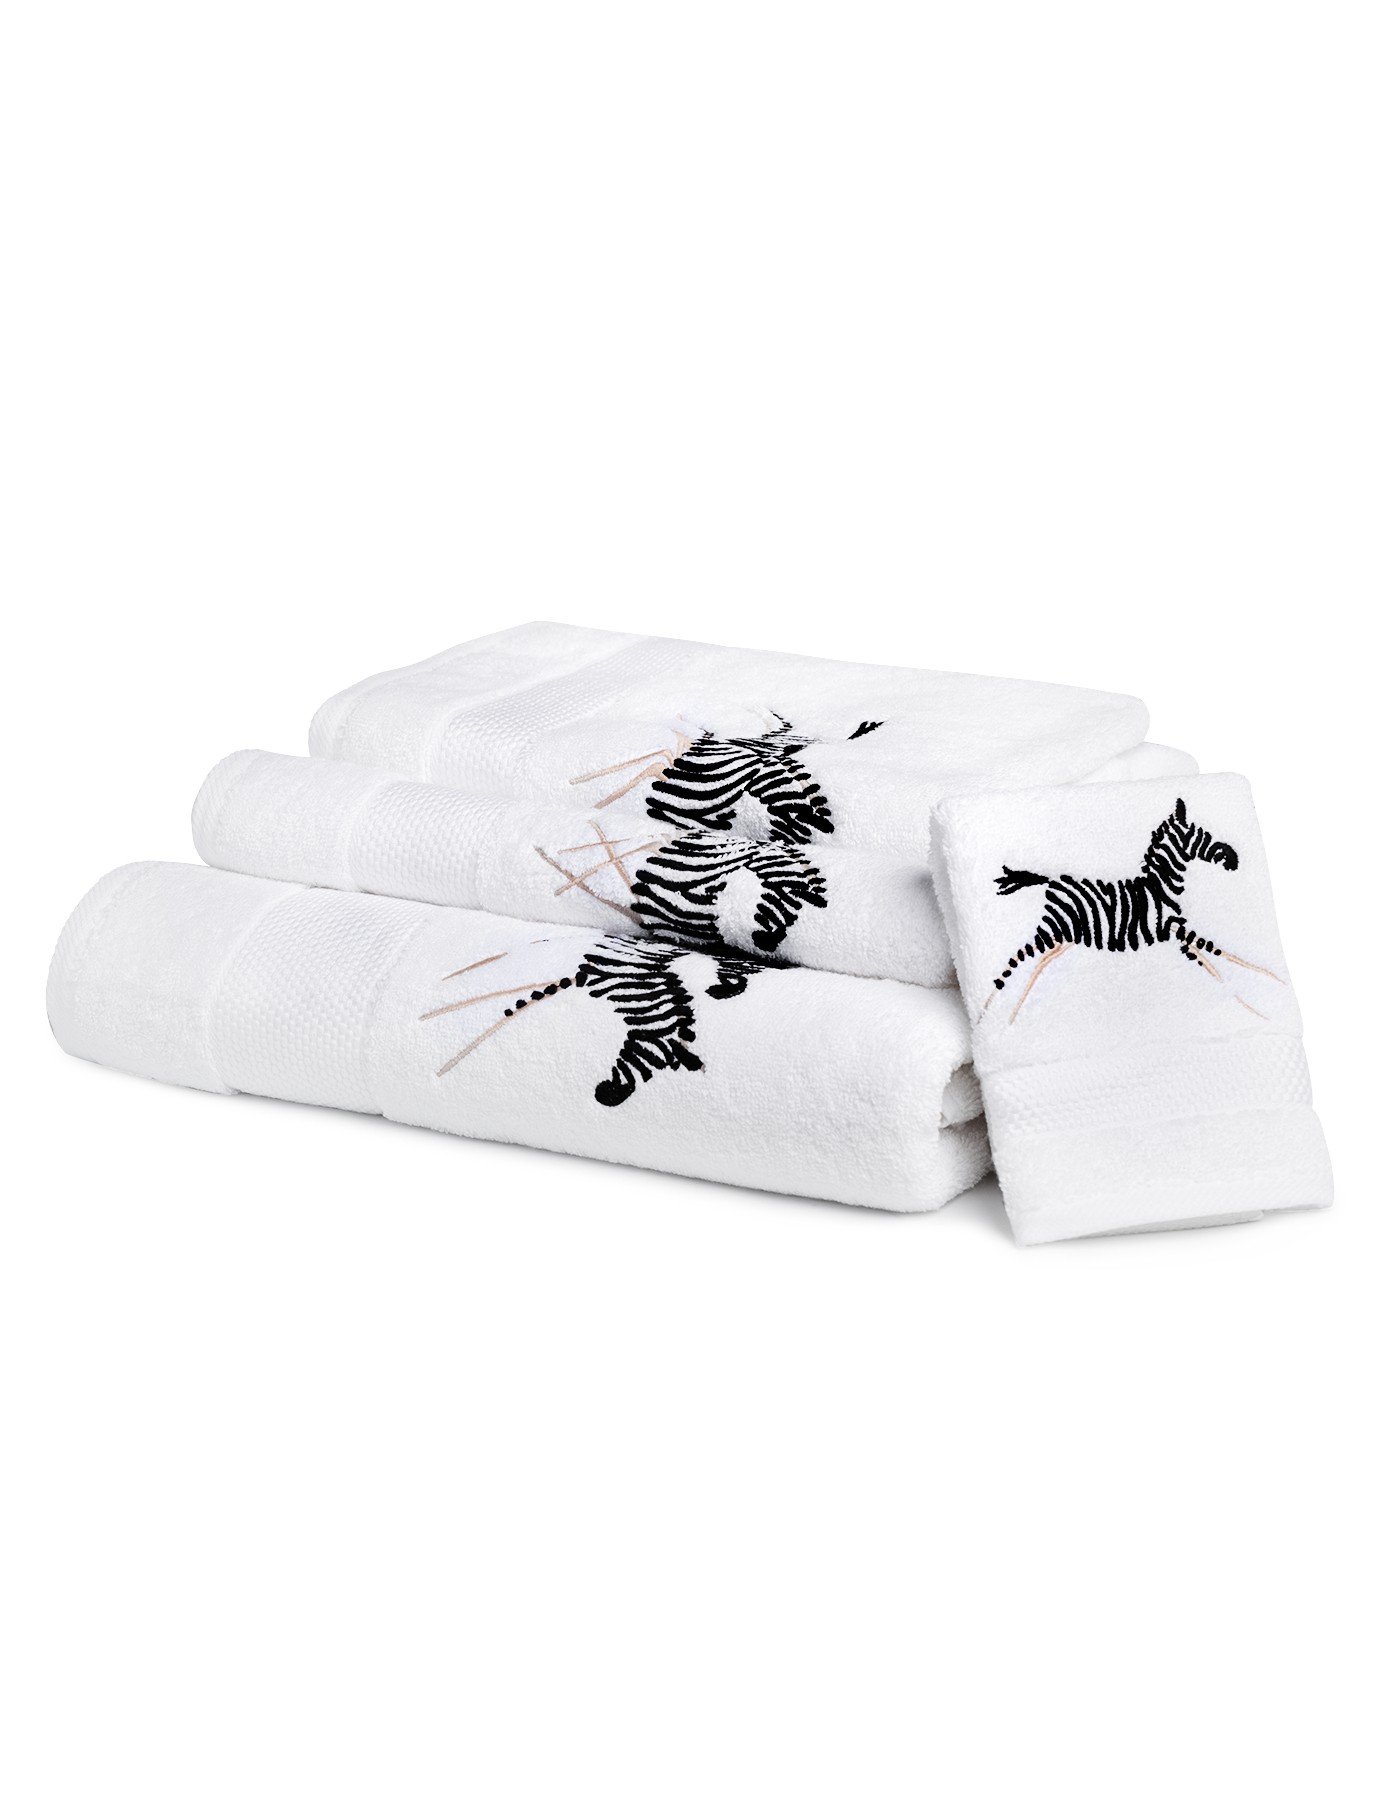 ZEBRES embroidered bath towels